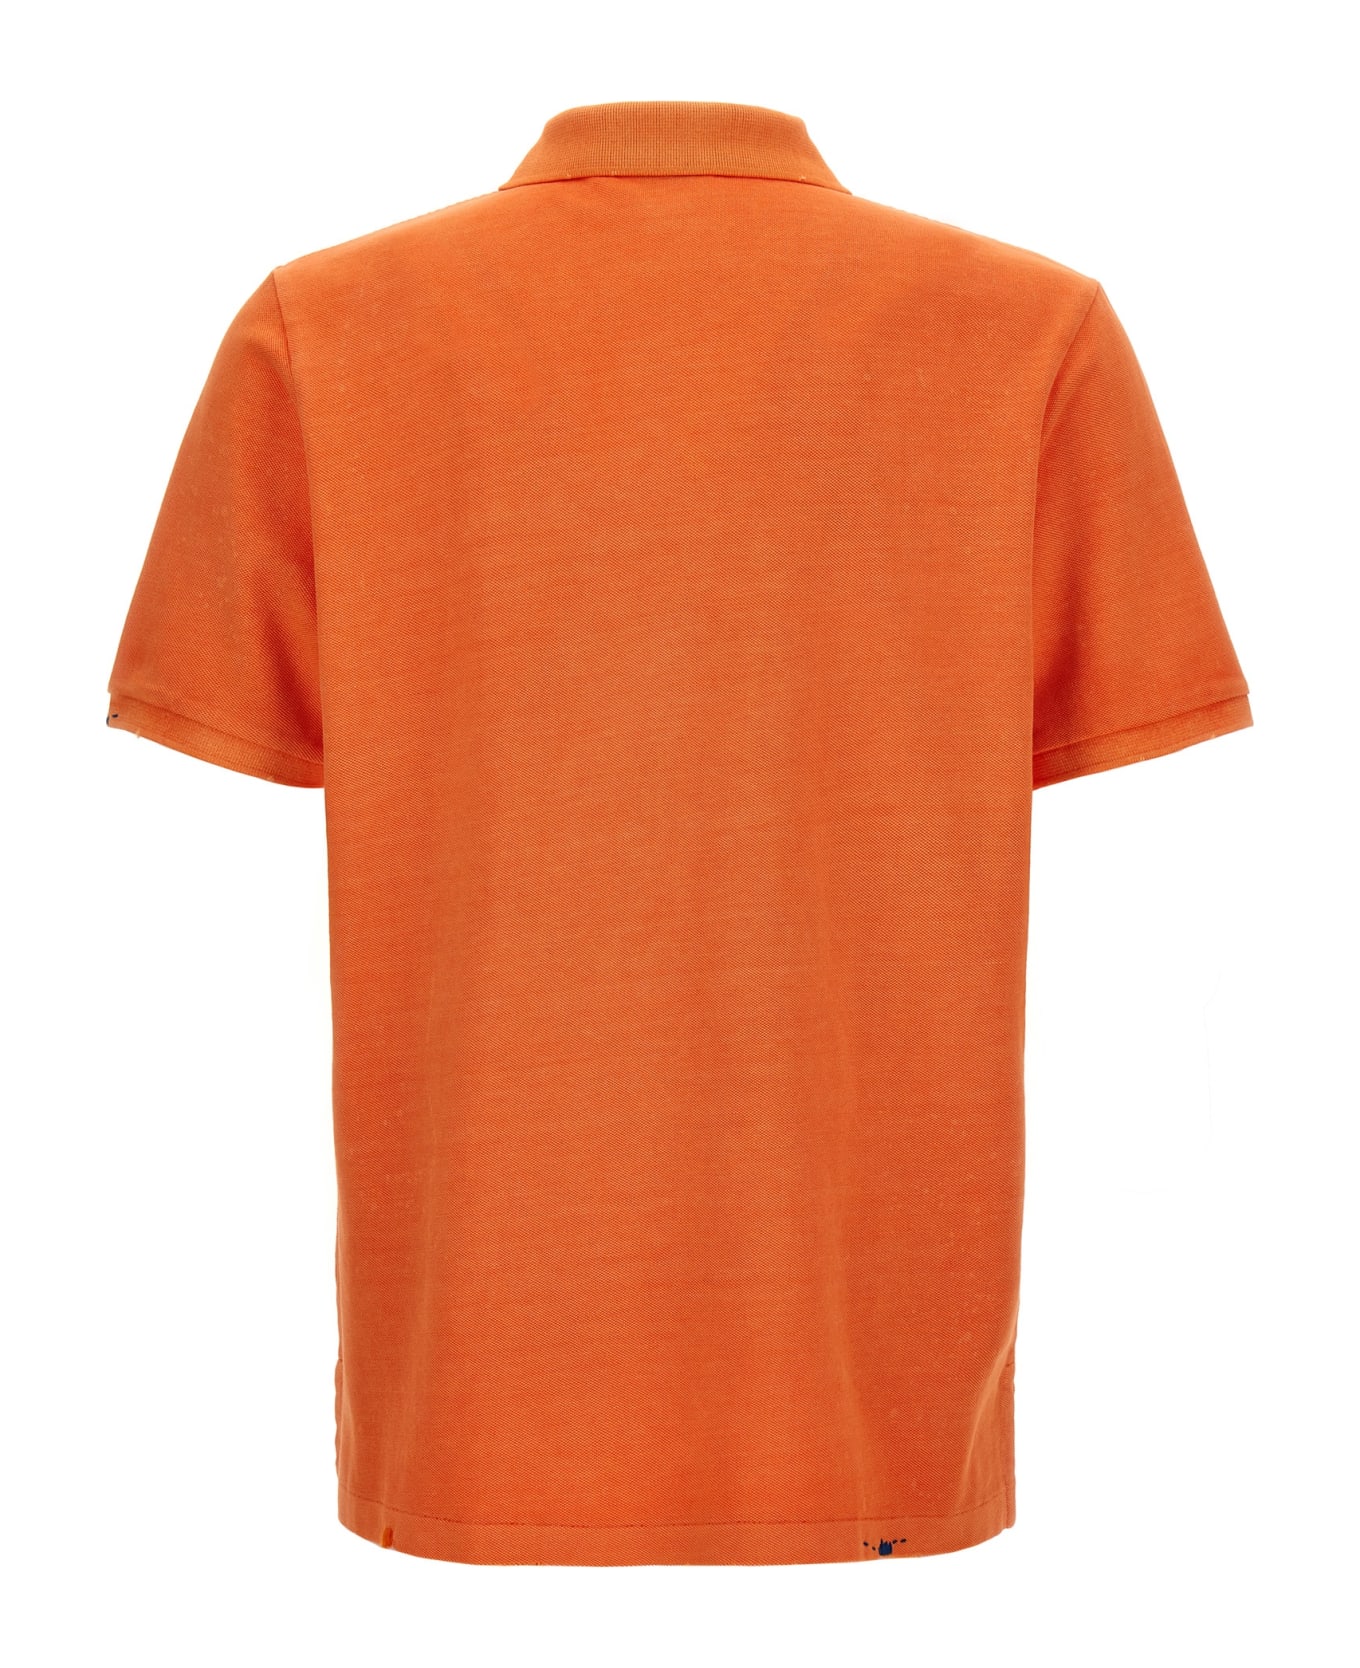 Polo Ralph Lauren Logo Embroidery Polo Shirt - Orange ポロシャツ